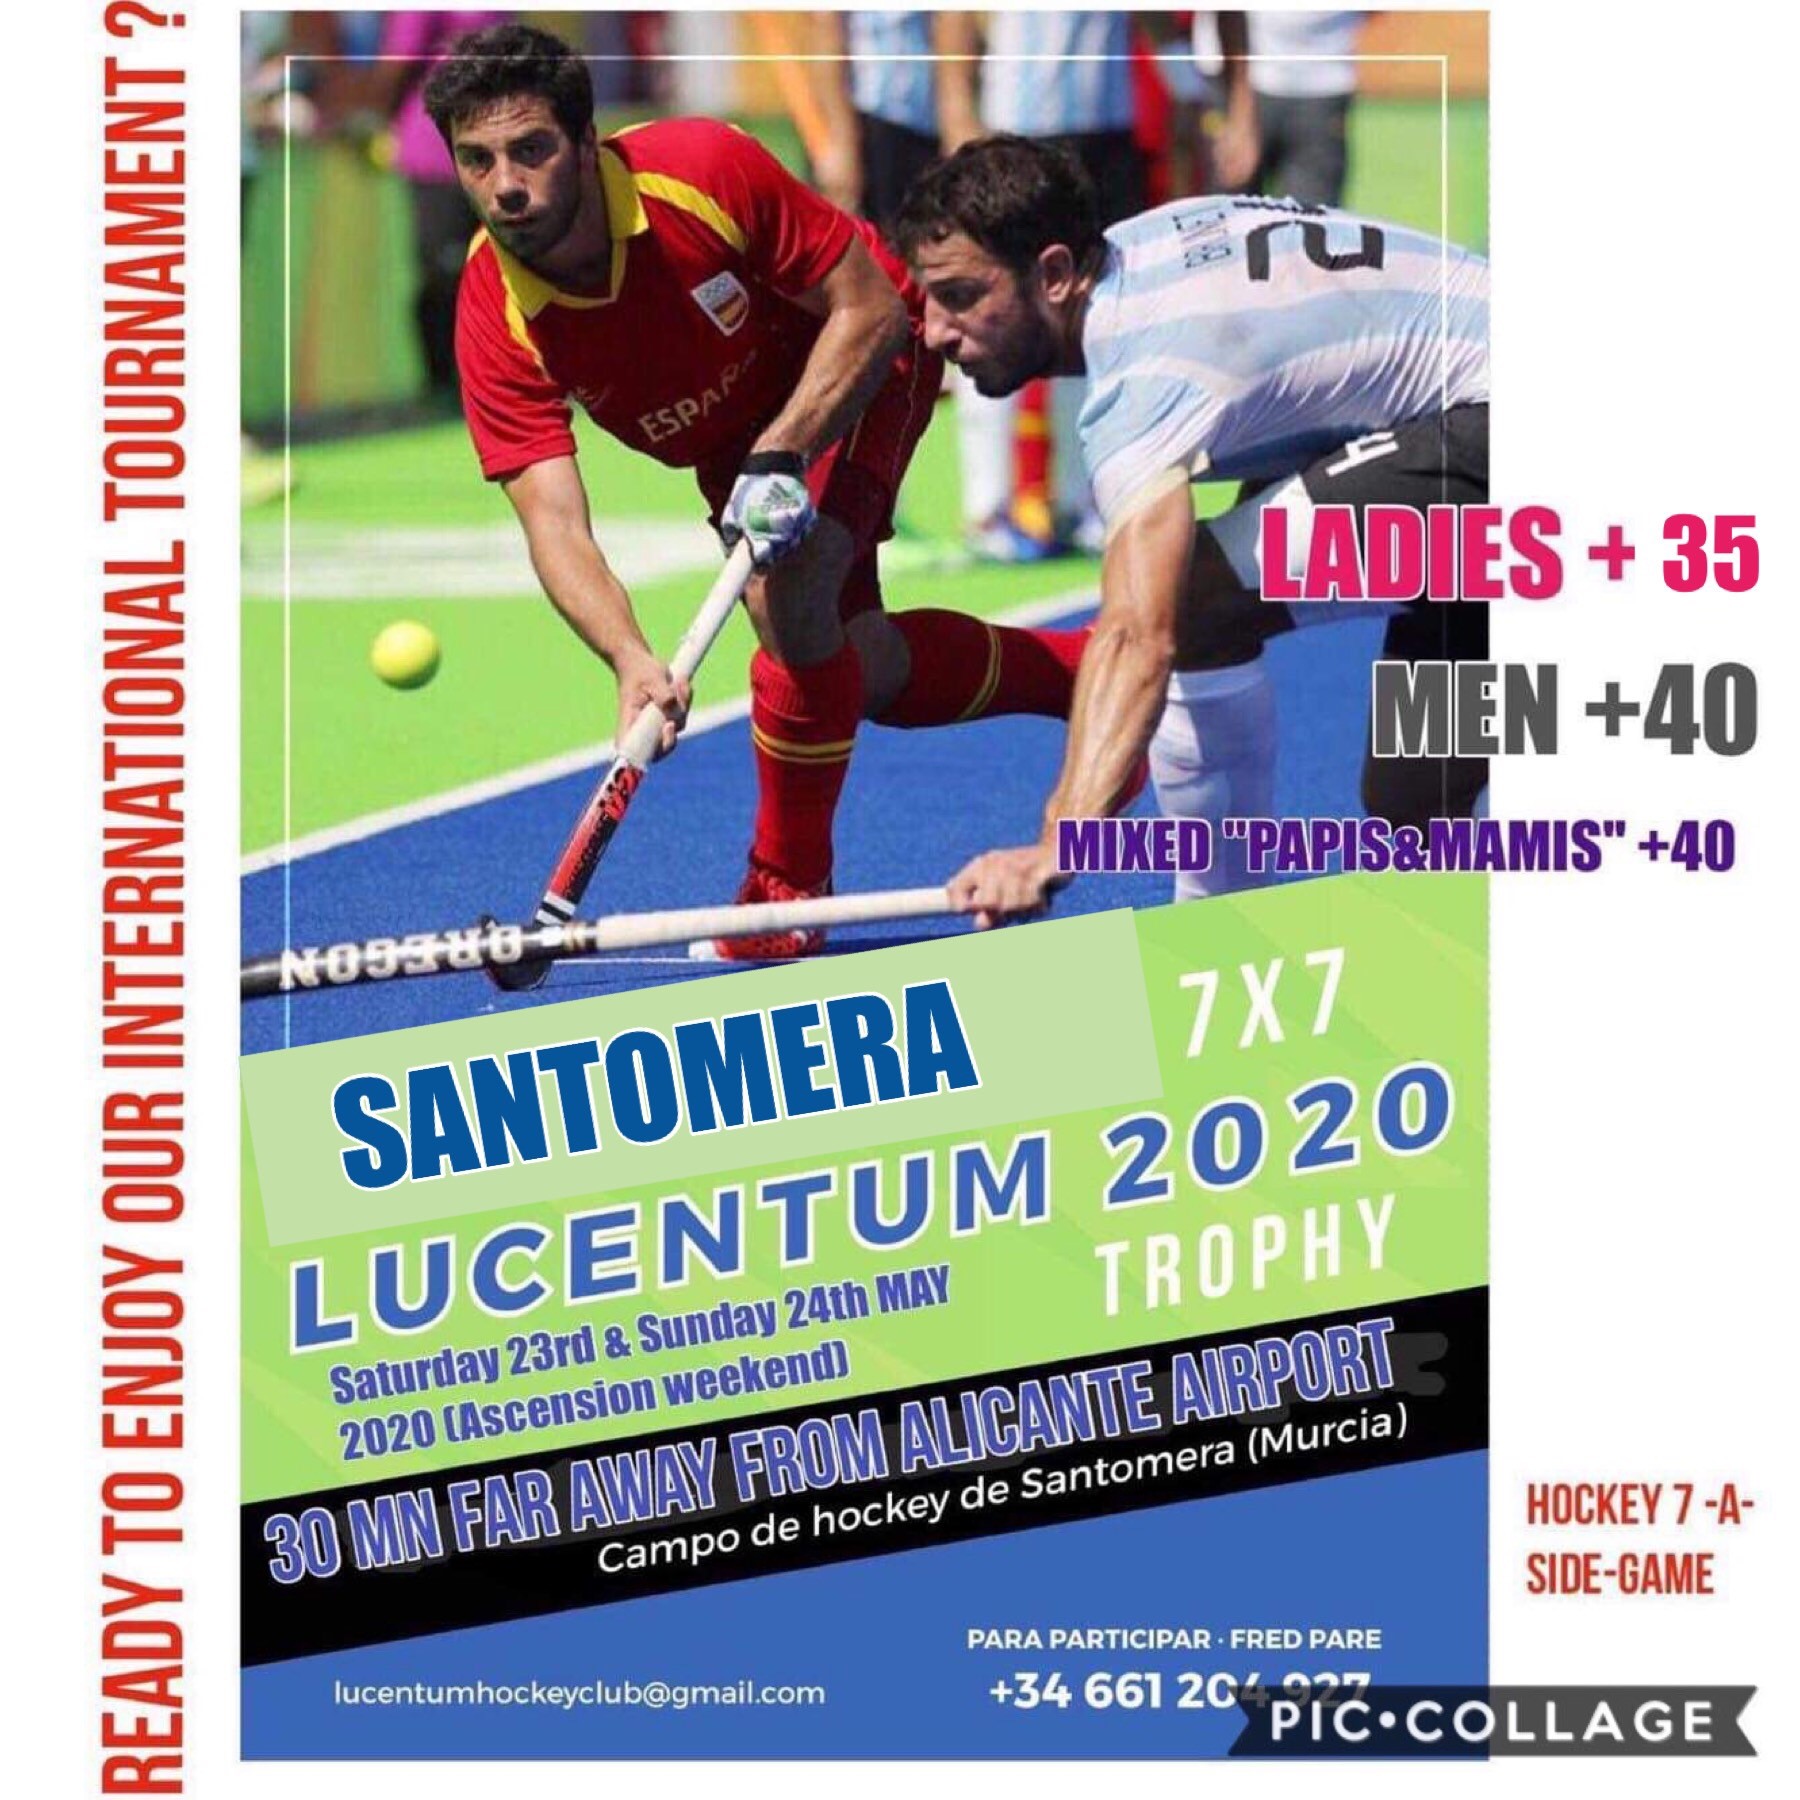 SANTOMERA LUCENTUM 2020